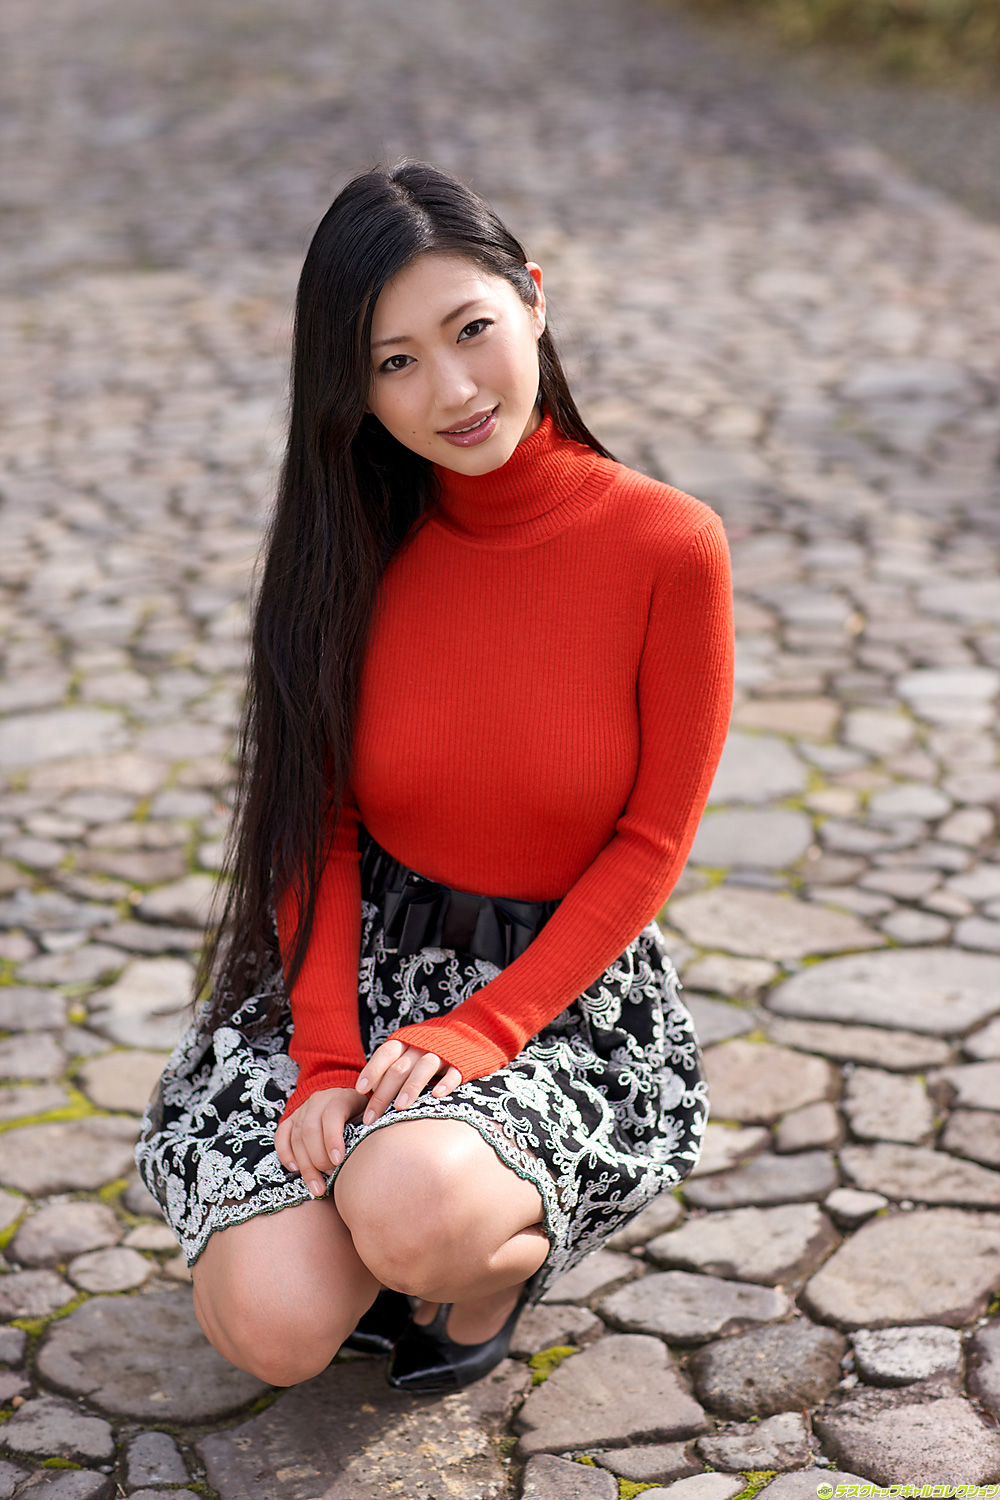 Mitsu Dan Japanese Gravure Idol Sexy Red Winter Top And Floral Mini Skirt Hot Fashion Photoshoot